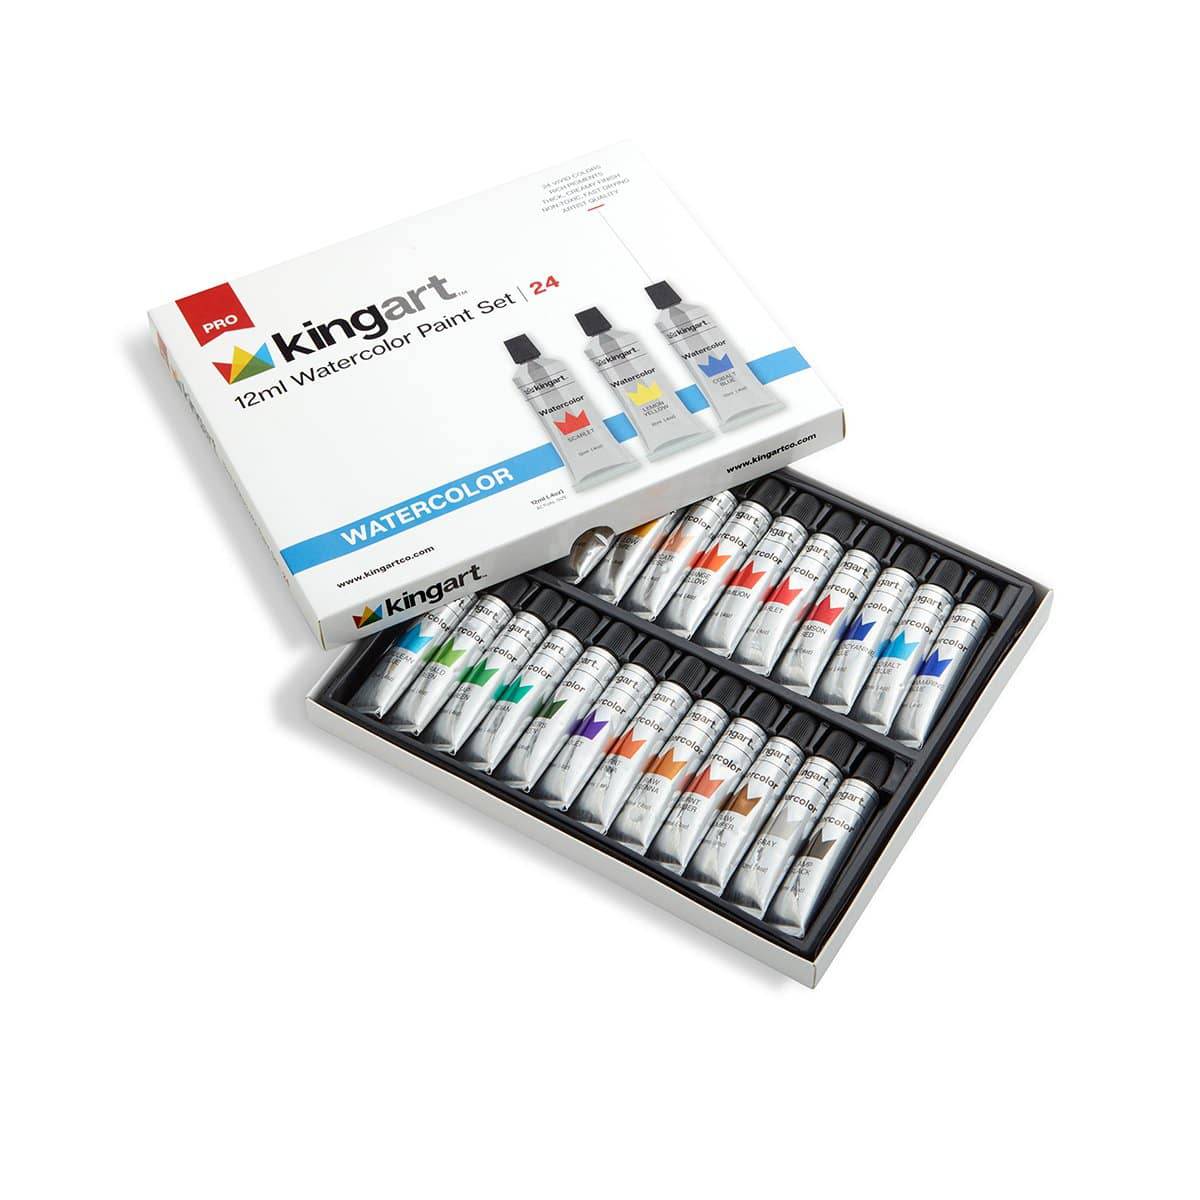 KINGART PRO 310-12 - Watercolor Pencils in Tin - 12 Unique Colors - Hub  Hobby